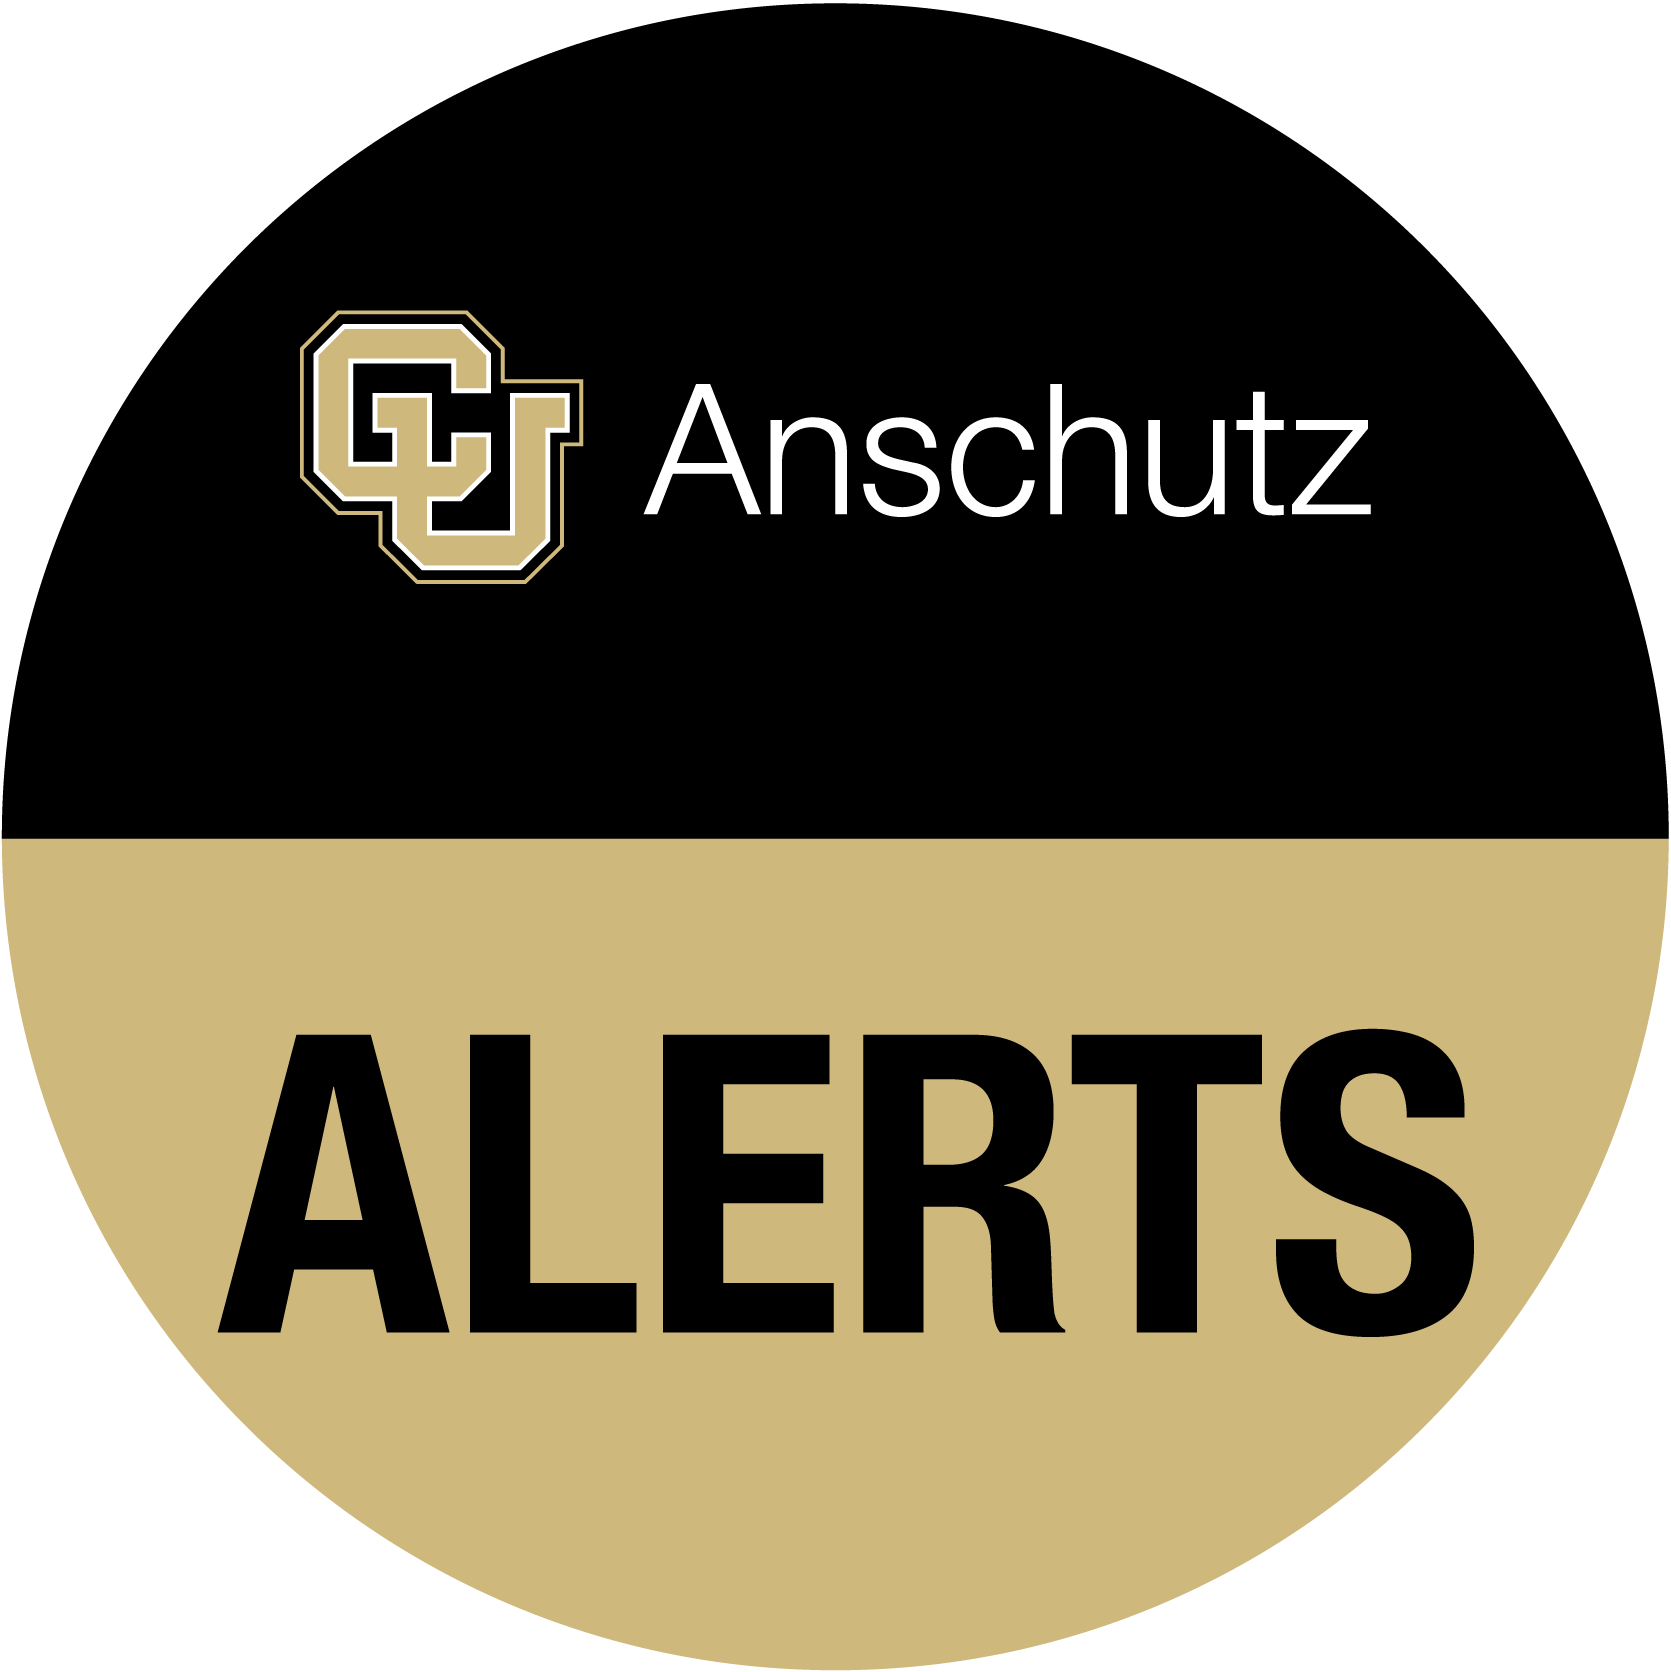 CU Anschutz Alerts logo